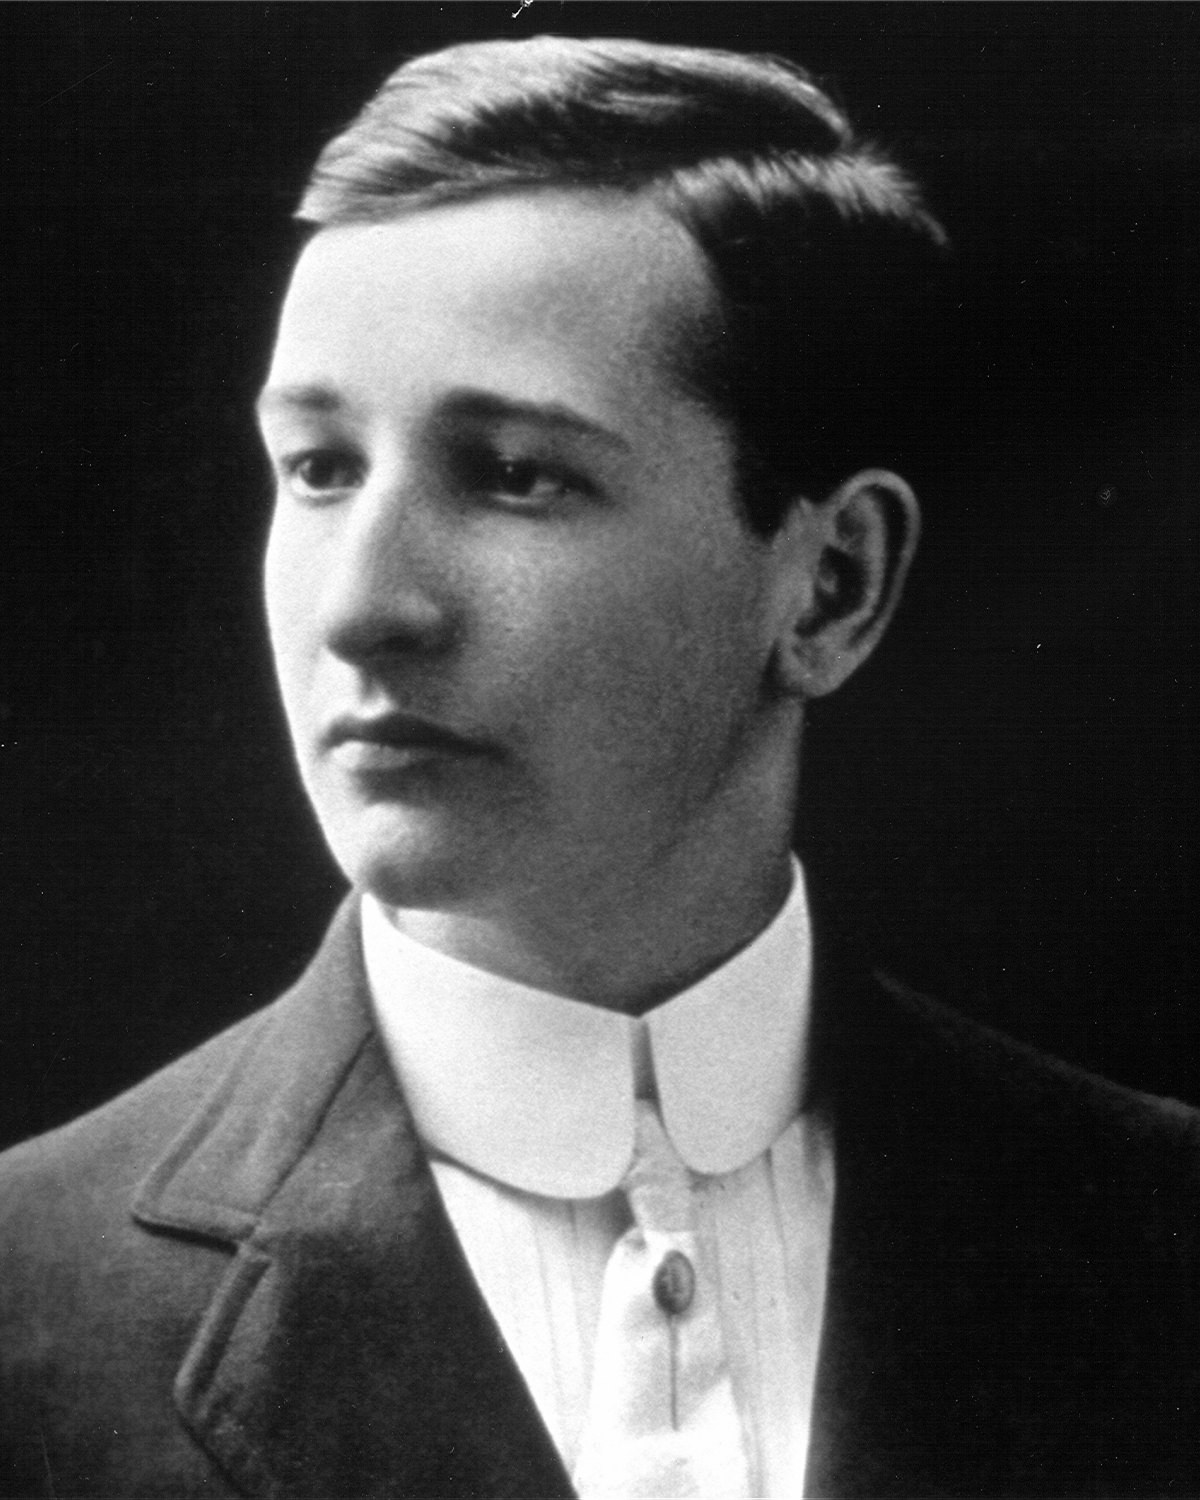 Portrait of a young D.J. De Pree.